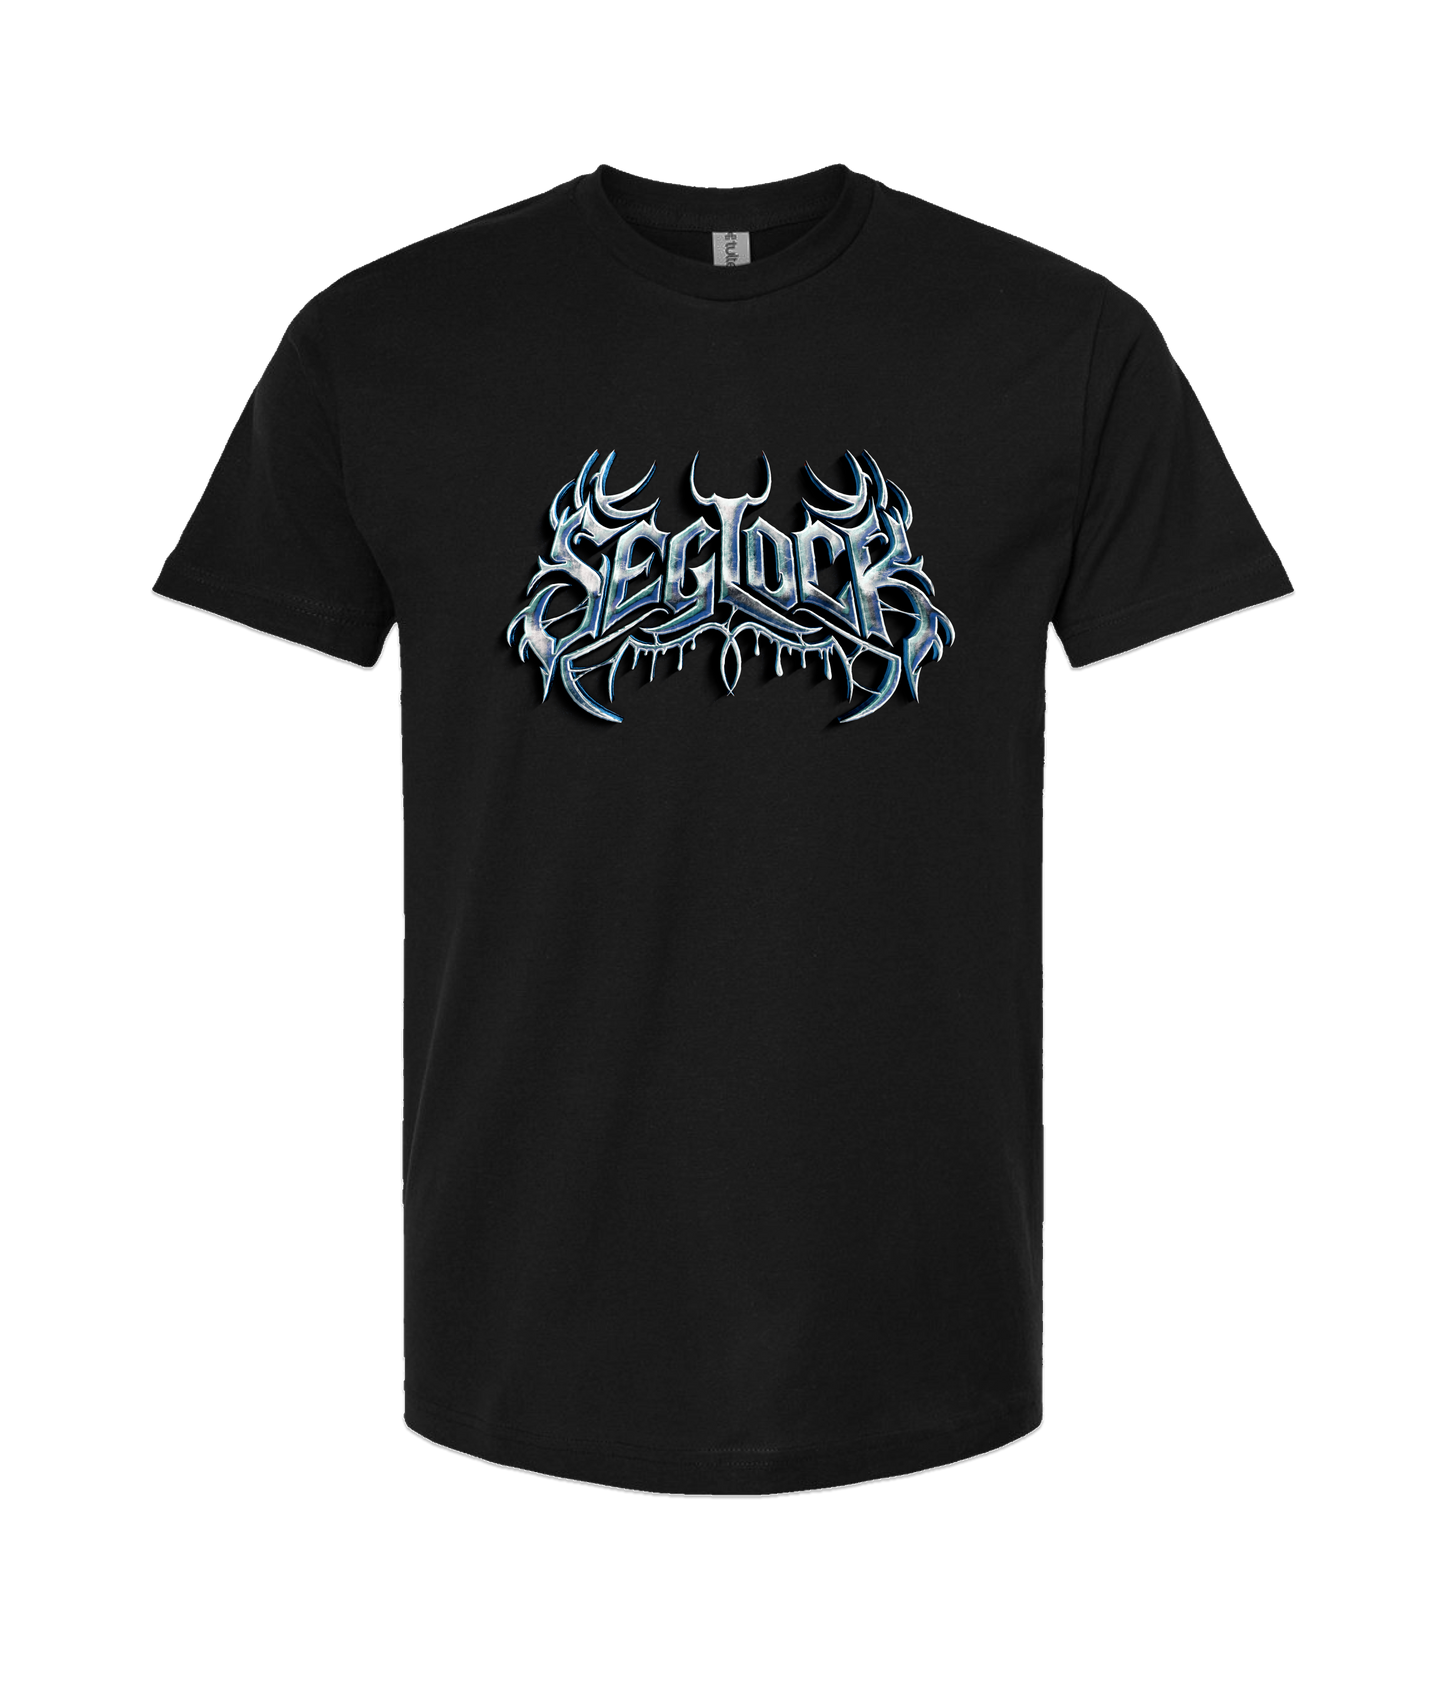 Seglock - Ice Blue - Black T-Shirt